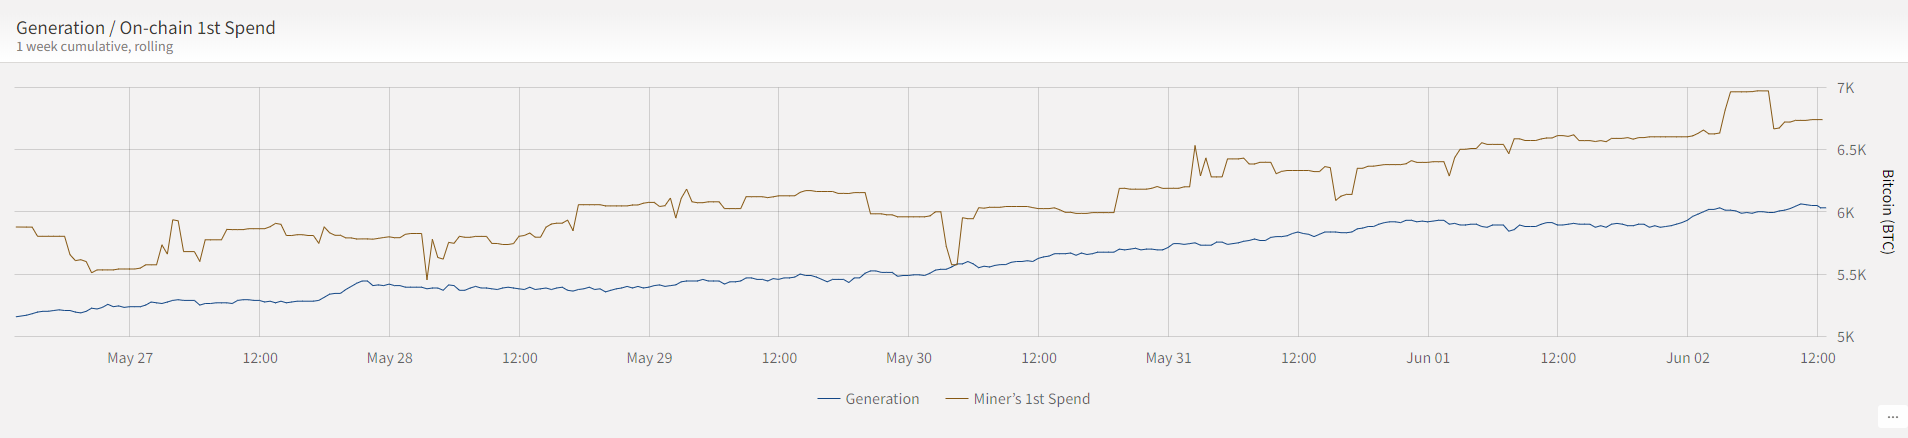 Source: ByteTree. Generation (blue line) vs. Miner's 1st Spend (brown line).